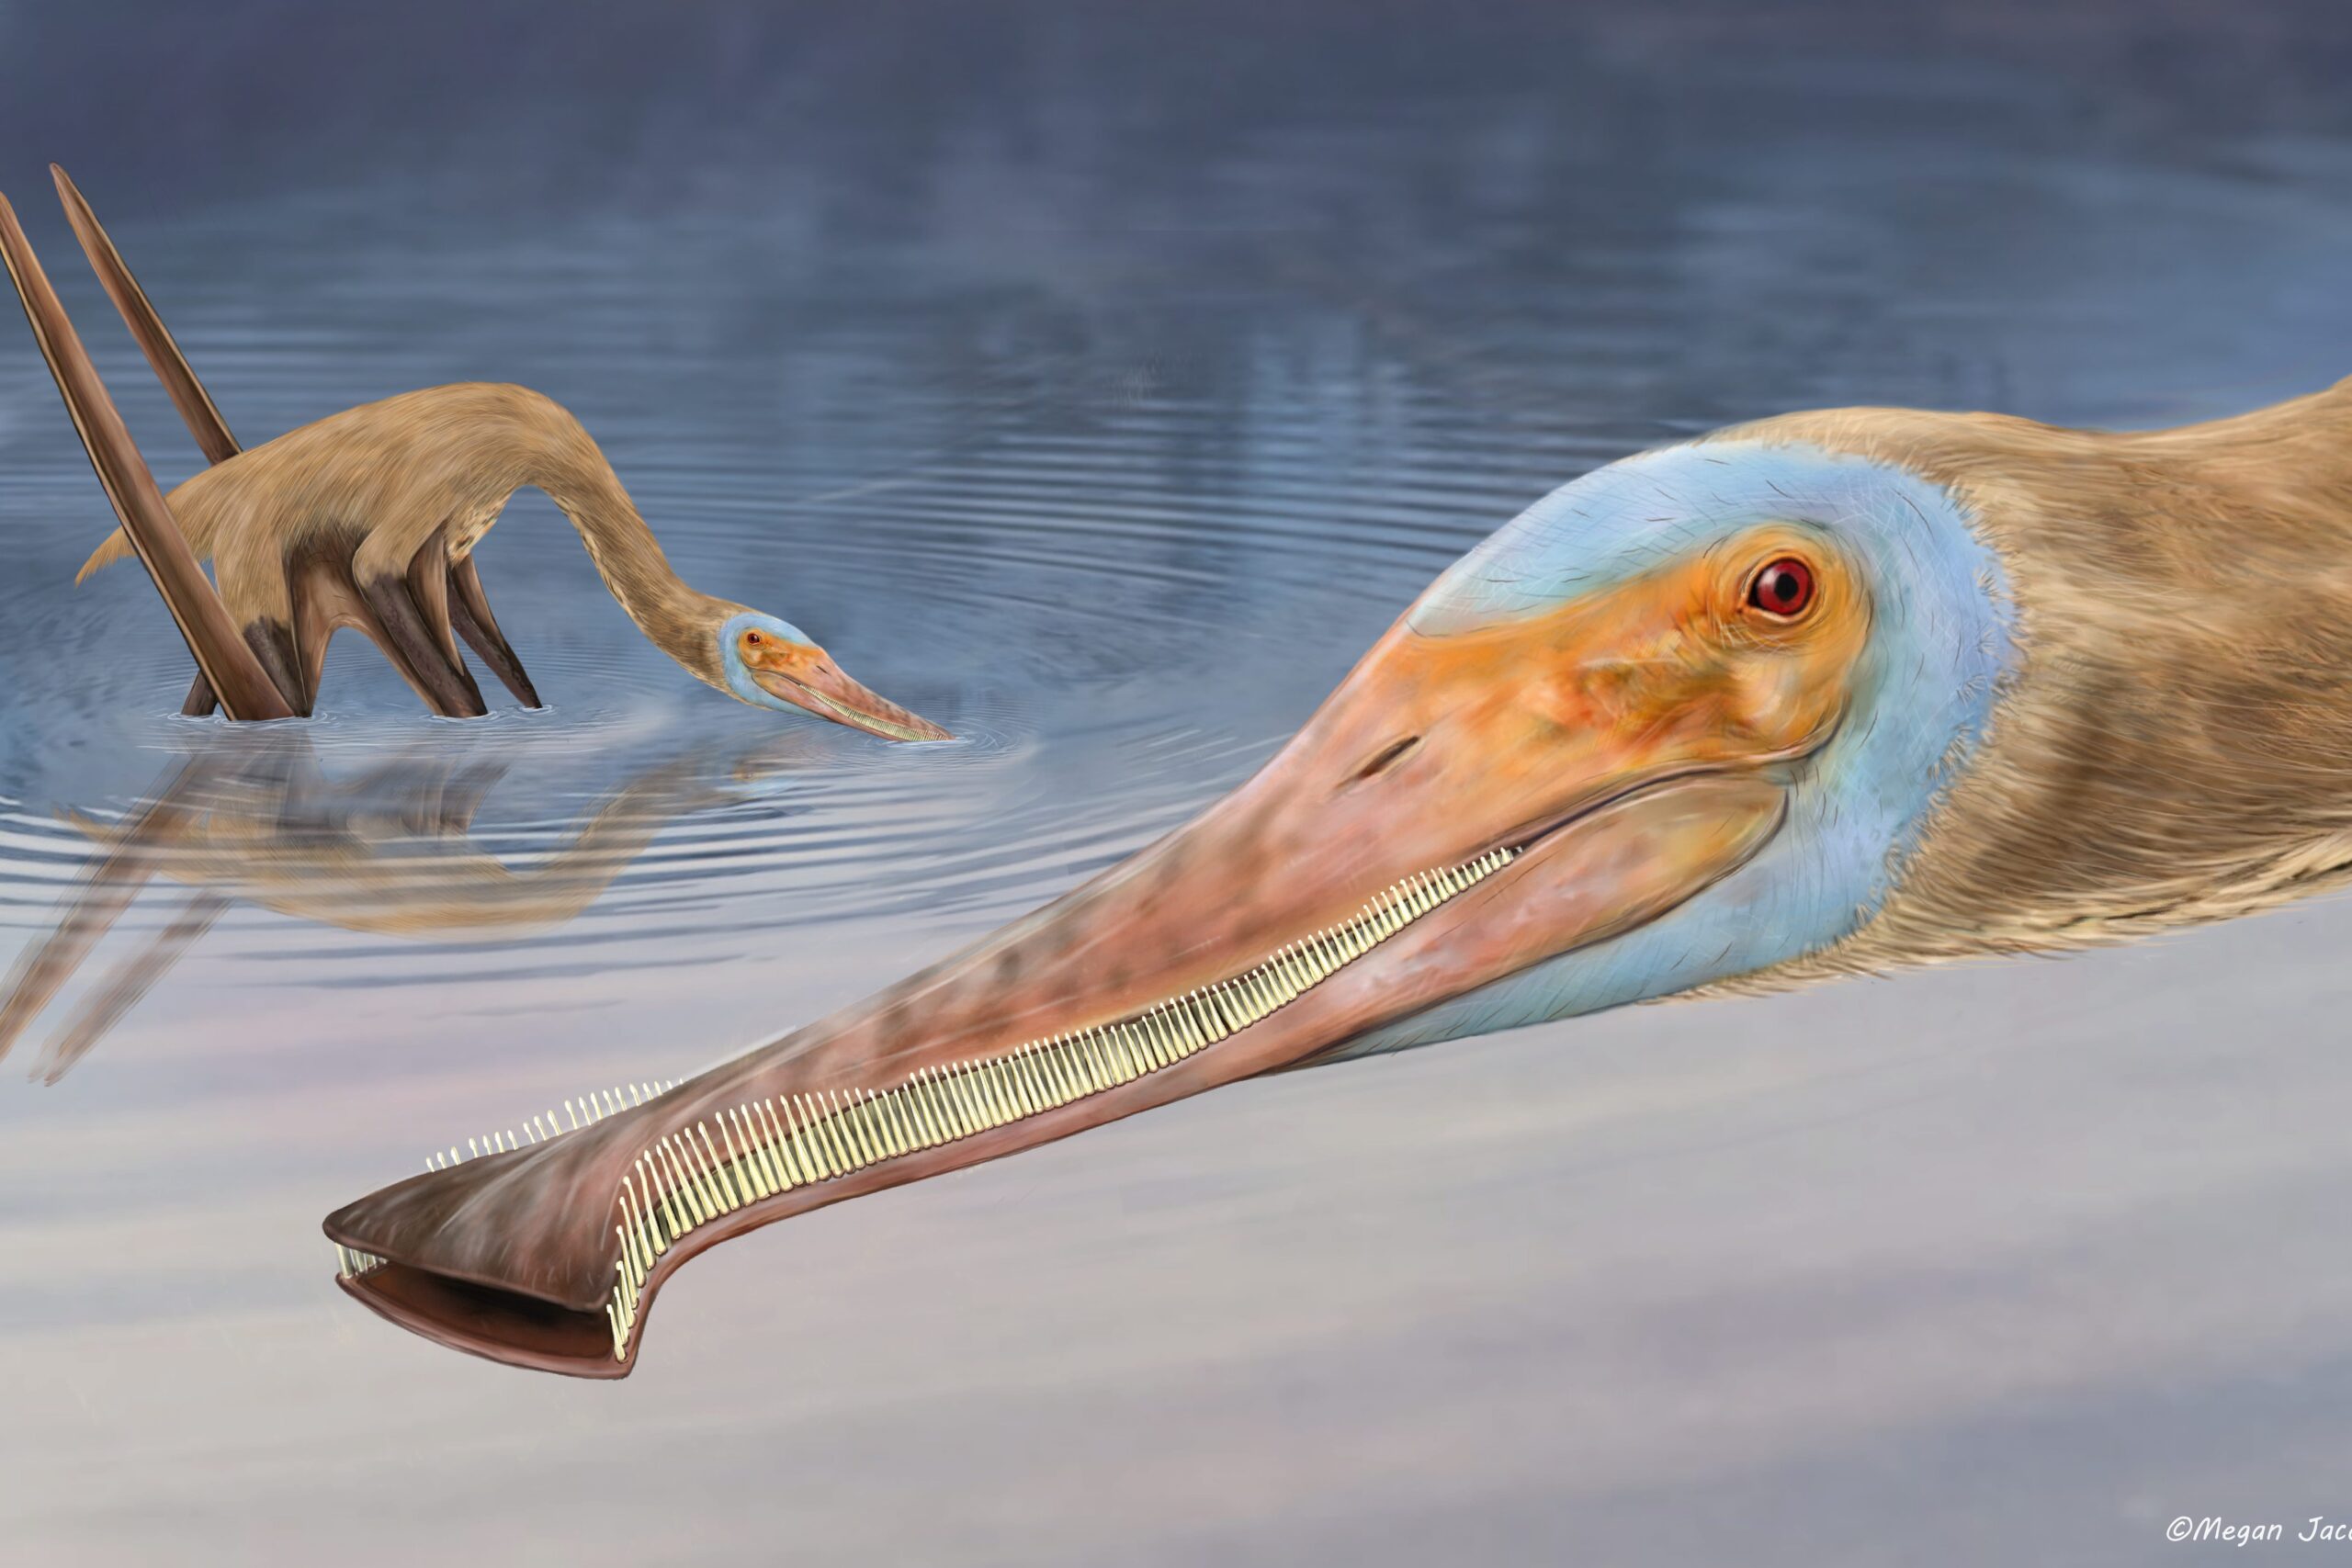 Jurassic-era Fish Fossil Found in Germany